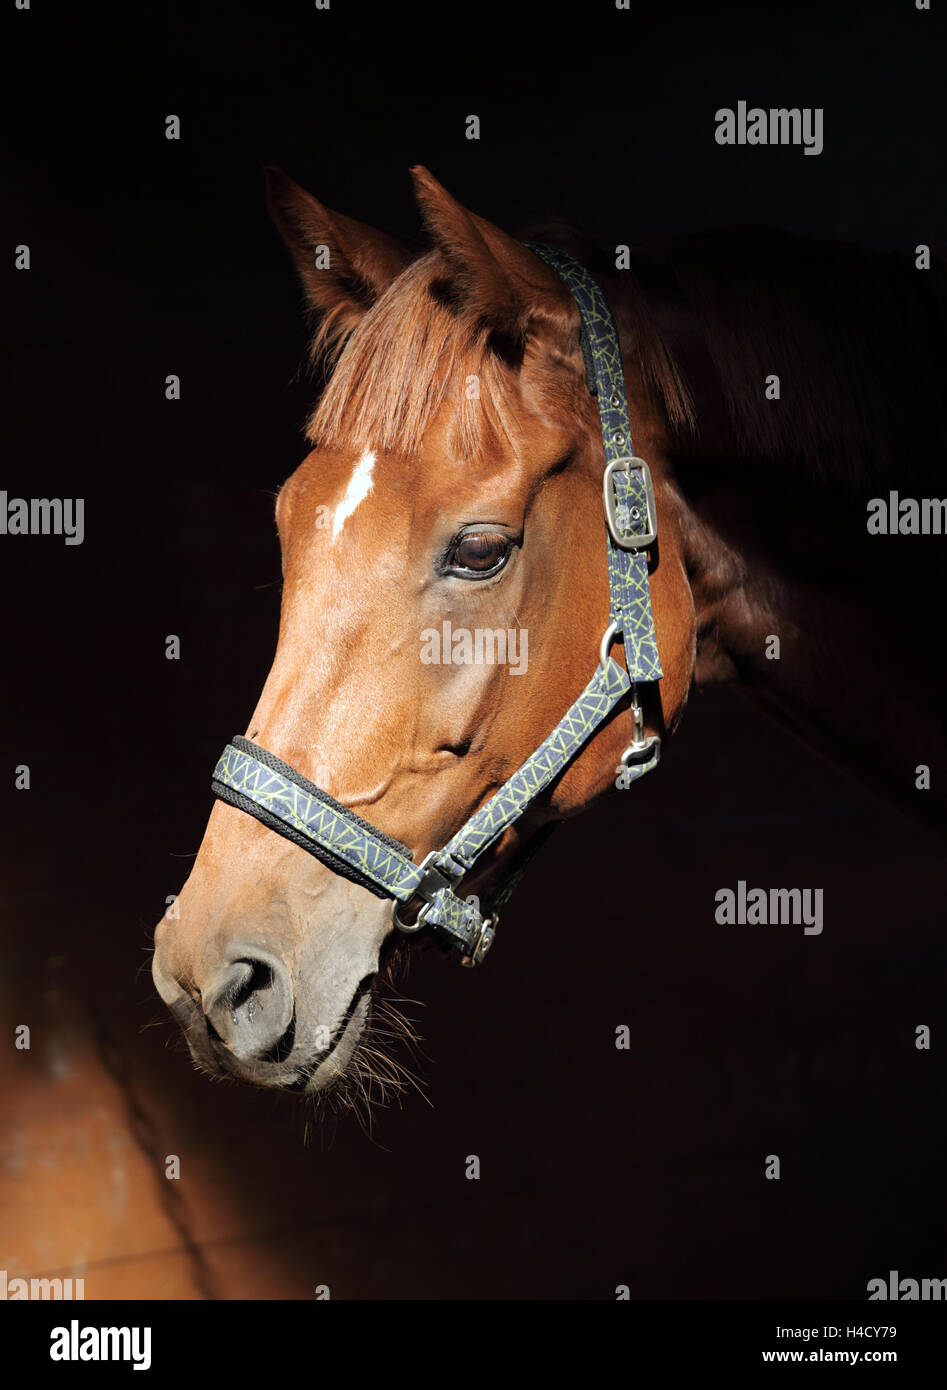 Low key headshot purebred horse in dark stable Stock Photo